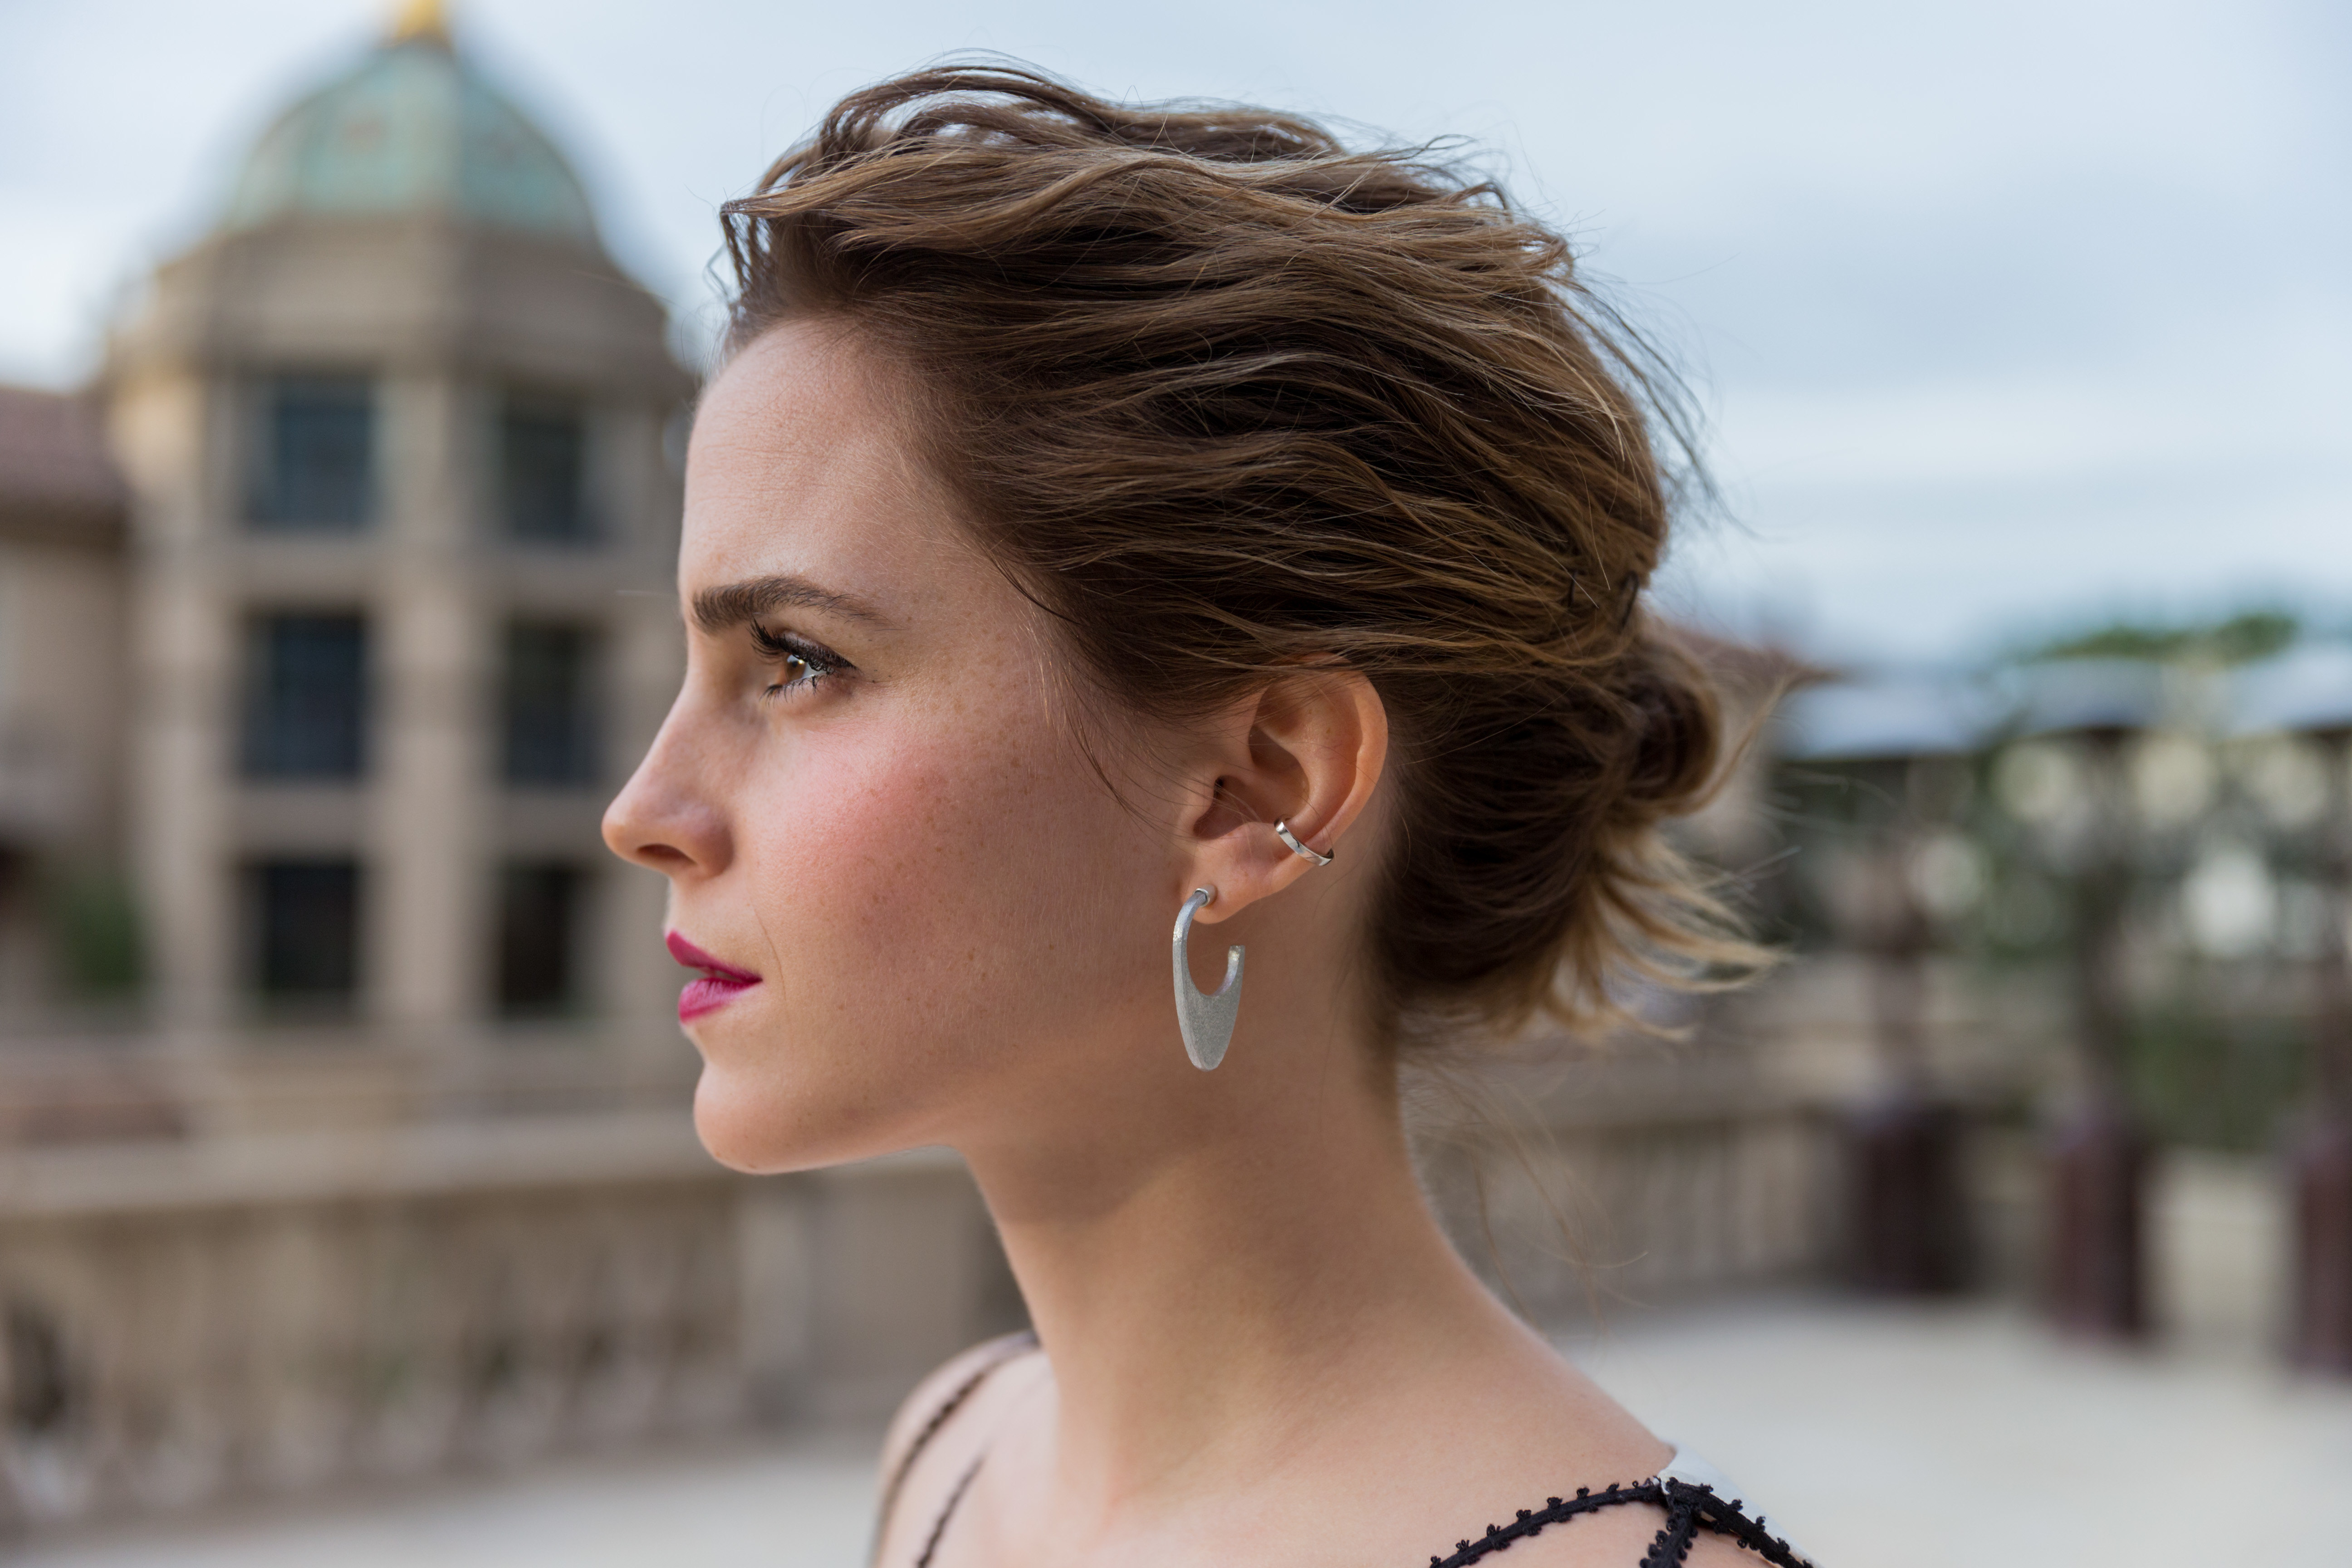 Wallpaper Actress Emma Watson face side view.